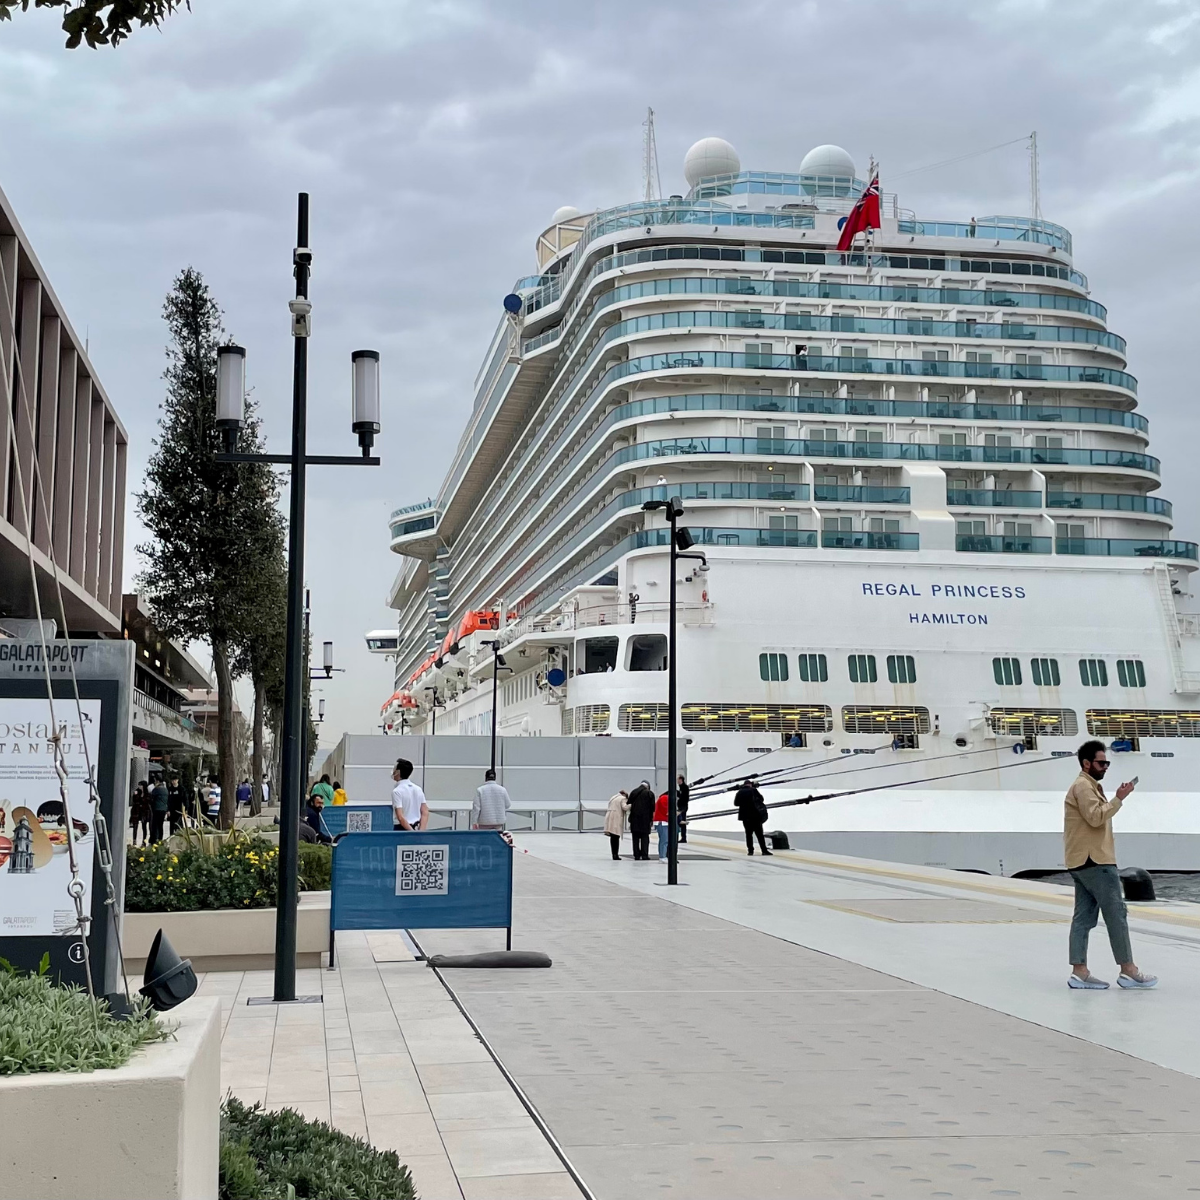 galataport istanbul cruise ship terminal